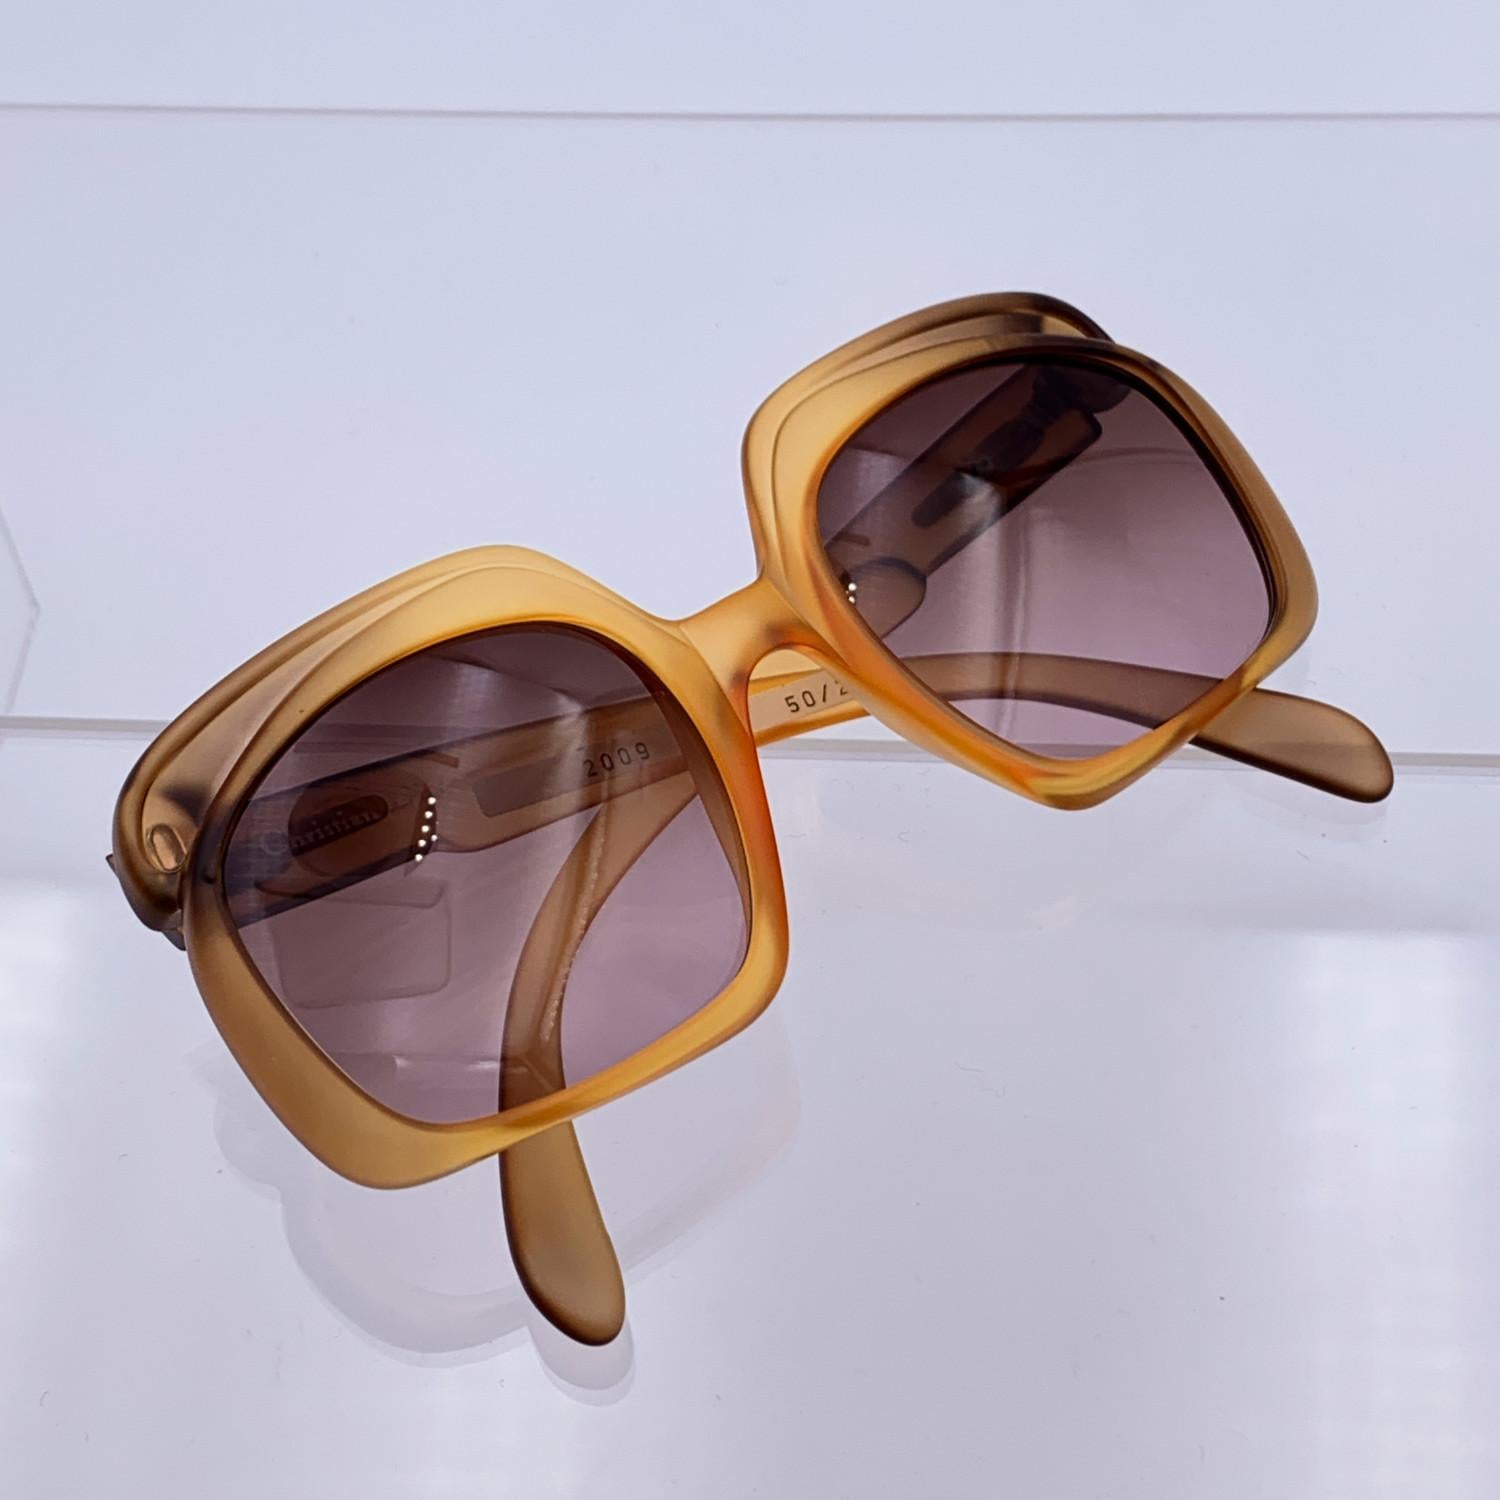 Vintage Christian Dior oversize sunglasses, Mod. 2009- Col D 368. Ombré orange Optyl frame. Original 100% Total UVA/UVB protection in gradient brown color. CD logo on temples. Made in Germany

Details

MATERIAL: Acetate

COLOR: Orange

MODEL: 2009 -